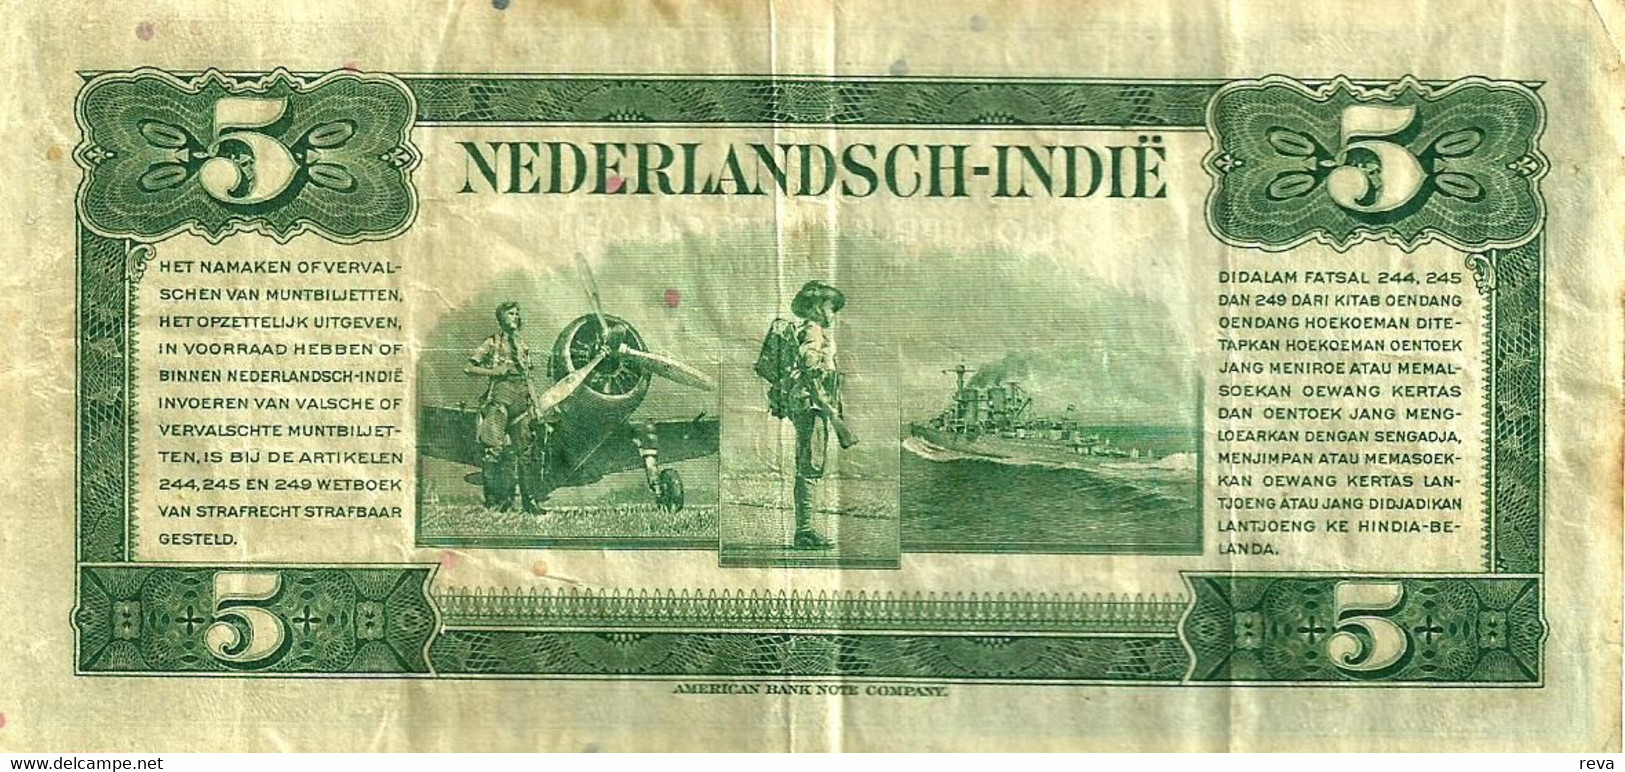 NETHERLANDS EAST INDIES 5 GULDEN BLUE WOMAN FRONT AIRPLANE SHIP BACK 02-03-1943 P.113 VF READ DESCRIPTION CAREFULLY !!! - Sonstige – Asien